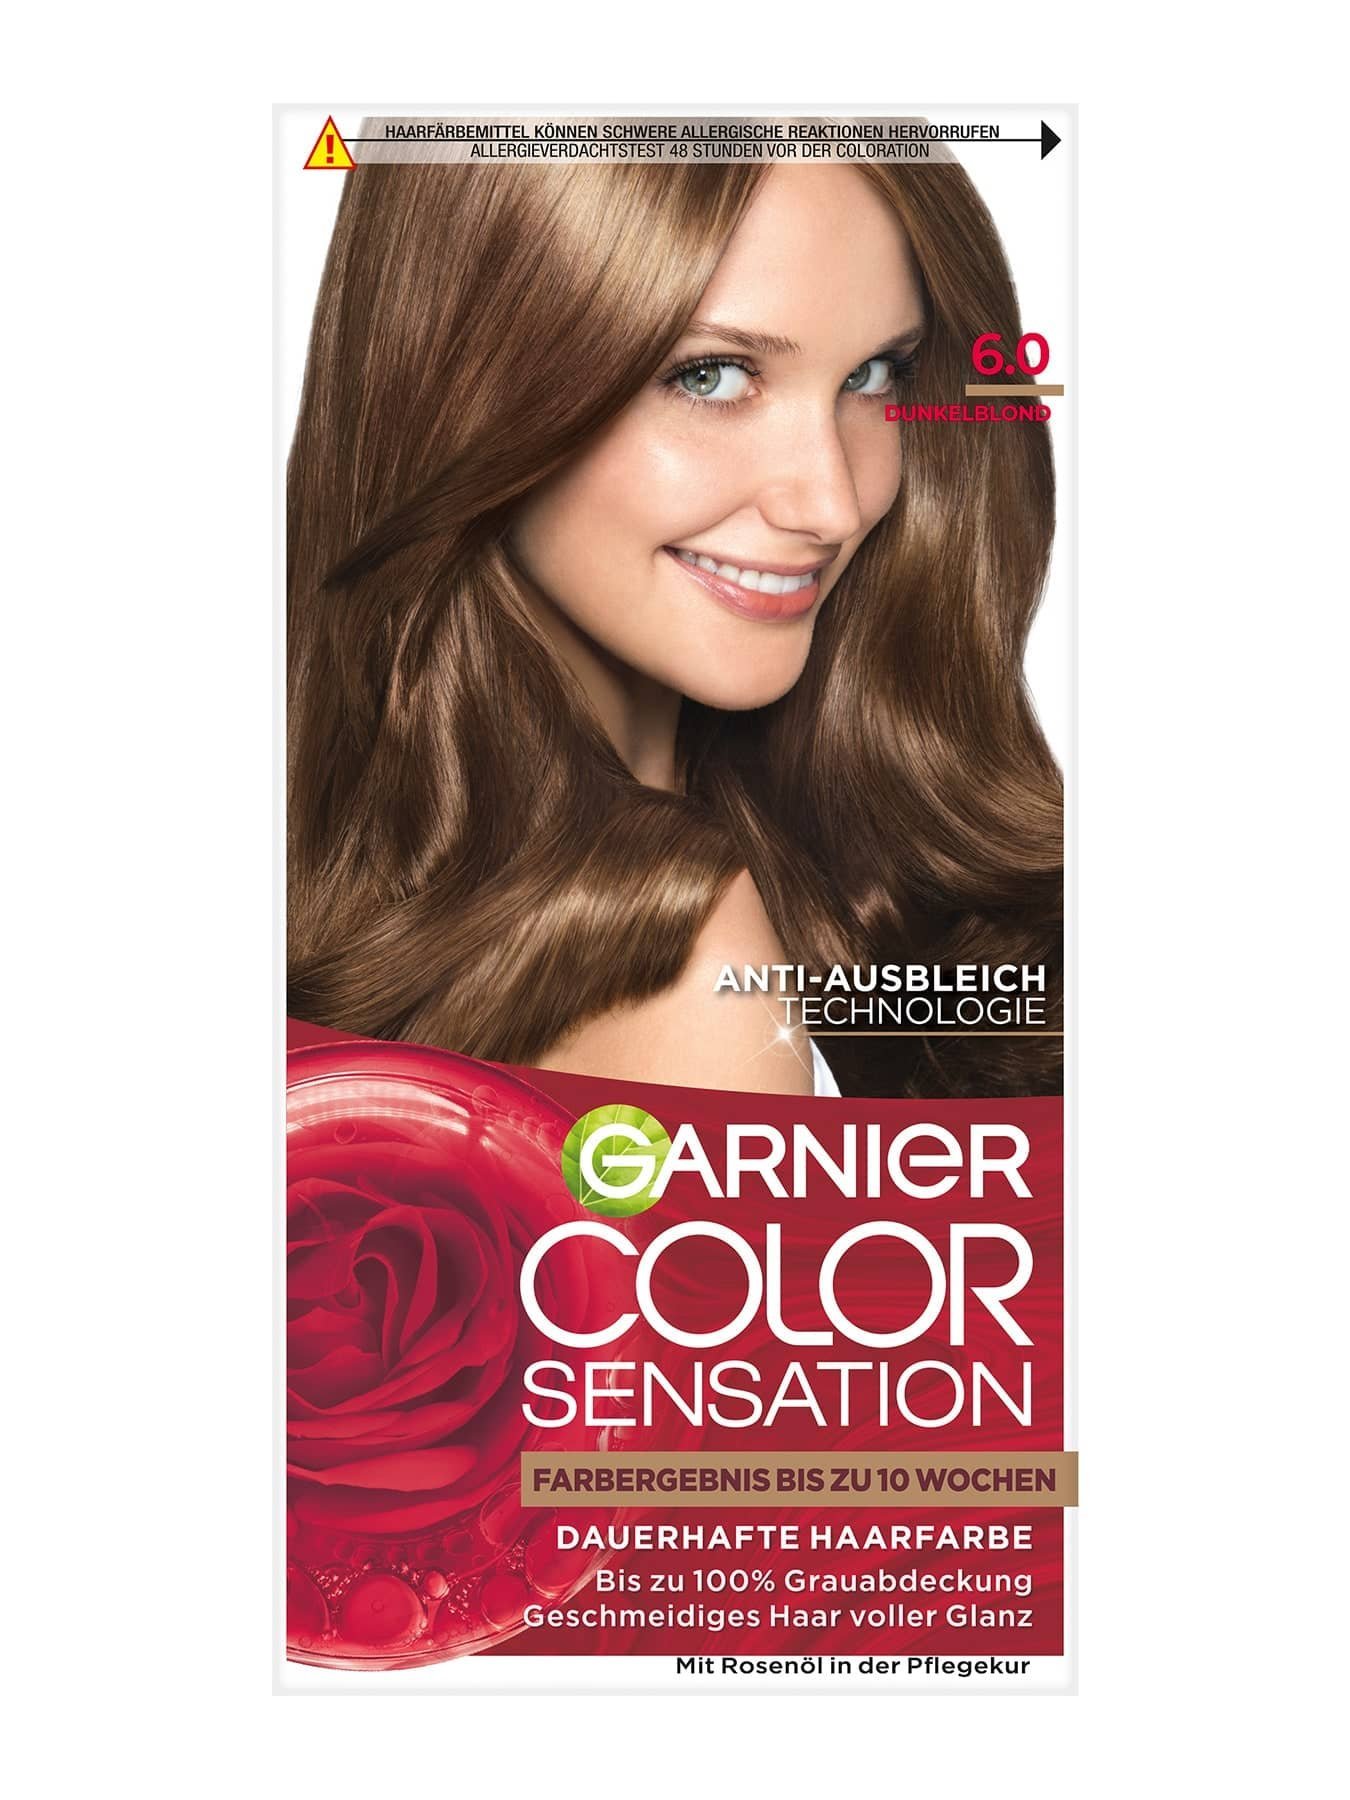 Color Sensation dauerhafte Haarfarbe 6.0 Dunkelblond Produktbild